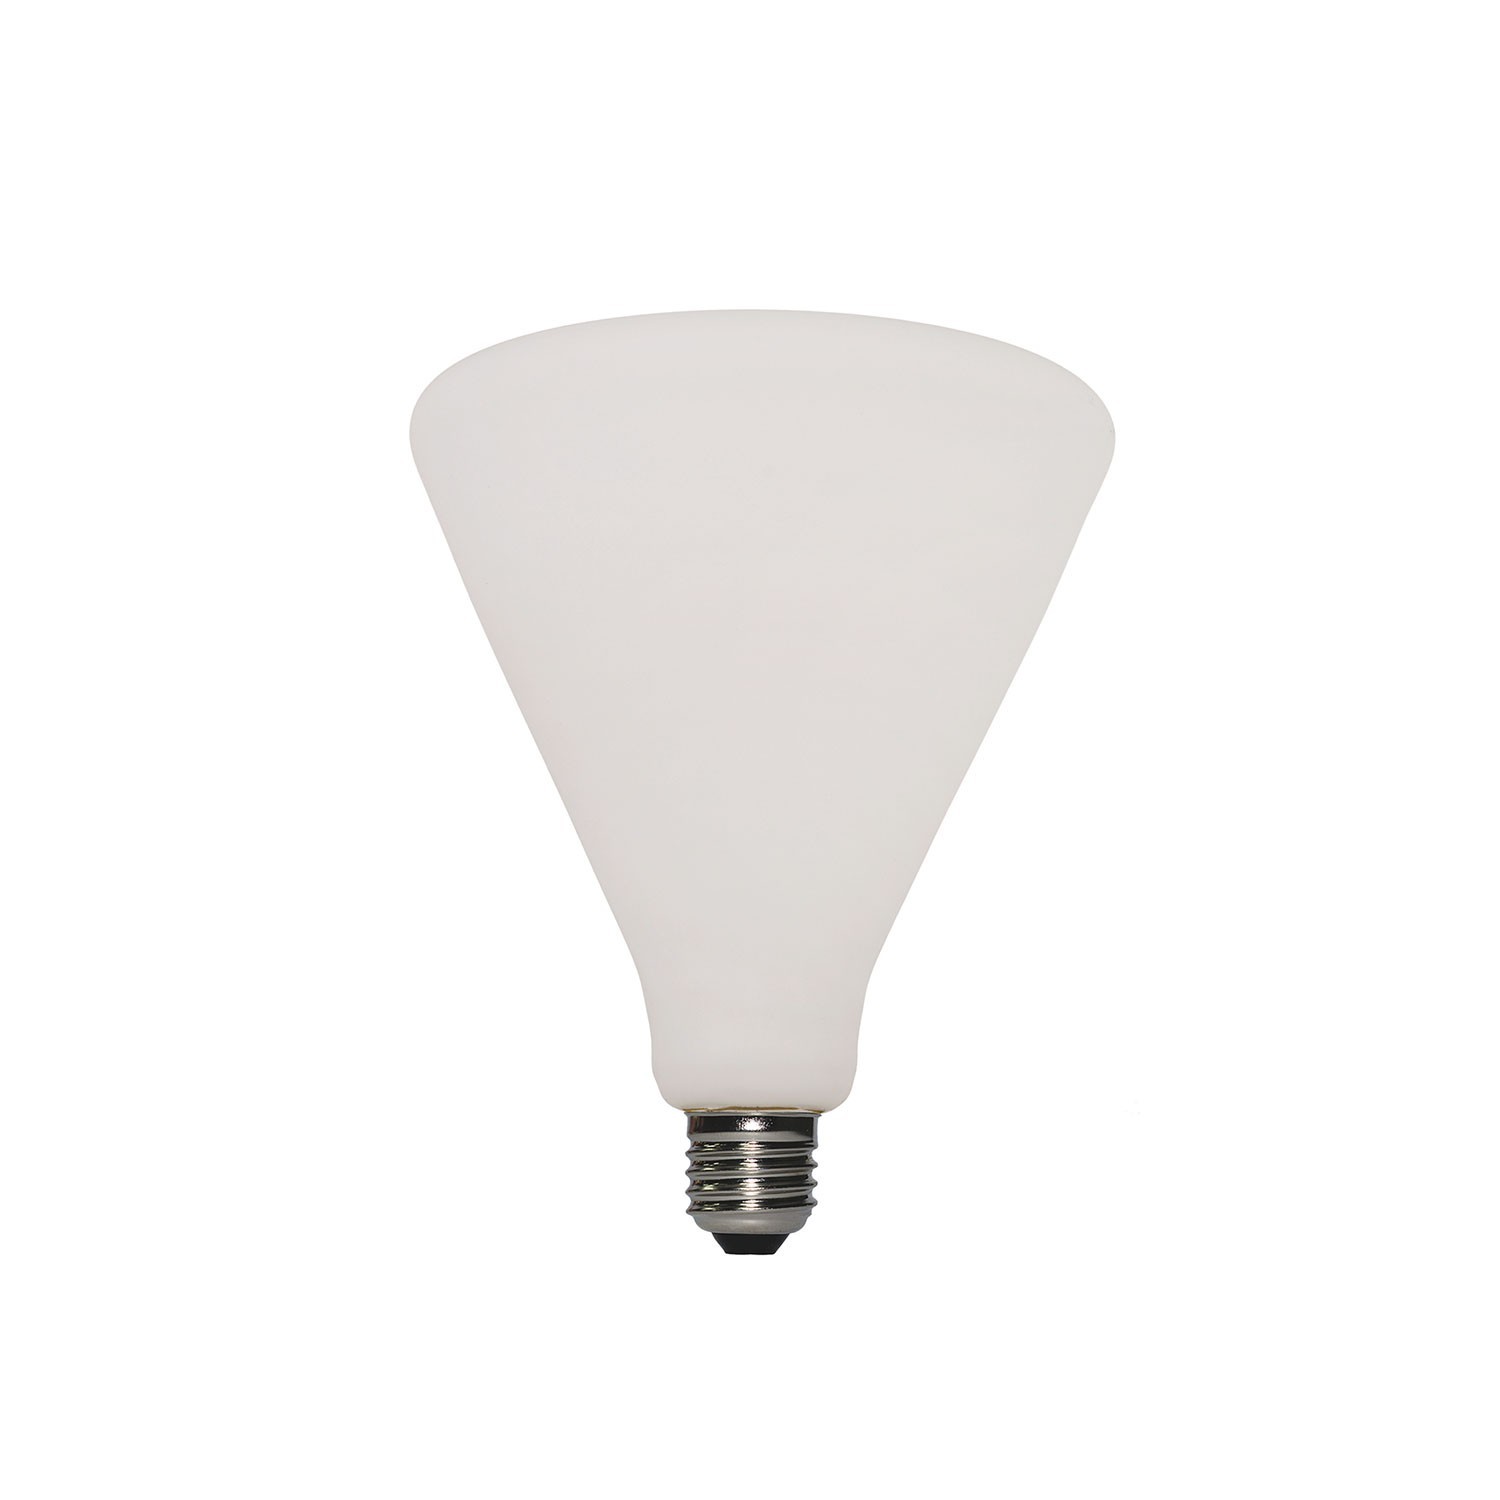 LED-Glühbirne Siro mit Porzellan-Effekt 6W 540Lm E27 2700K Dimmbar